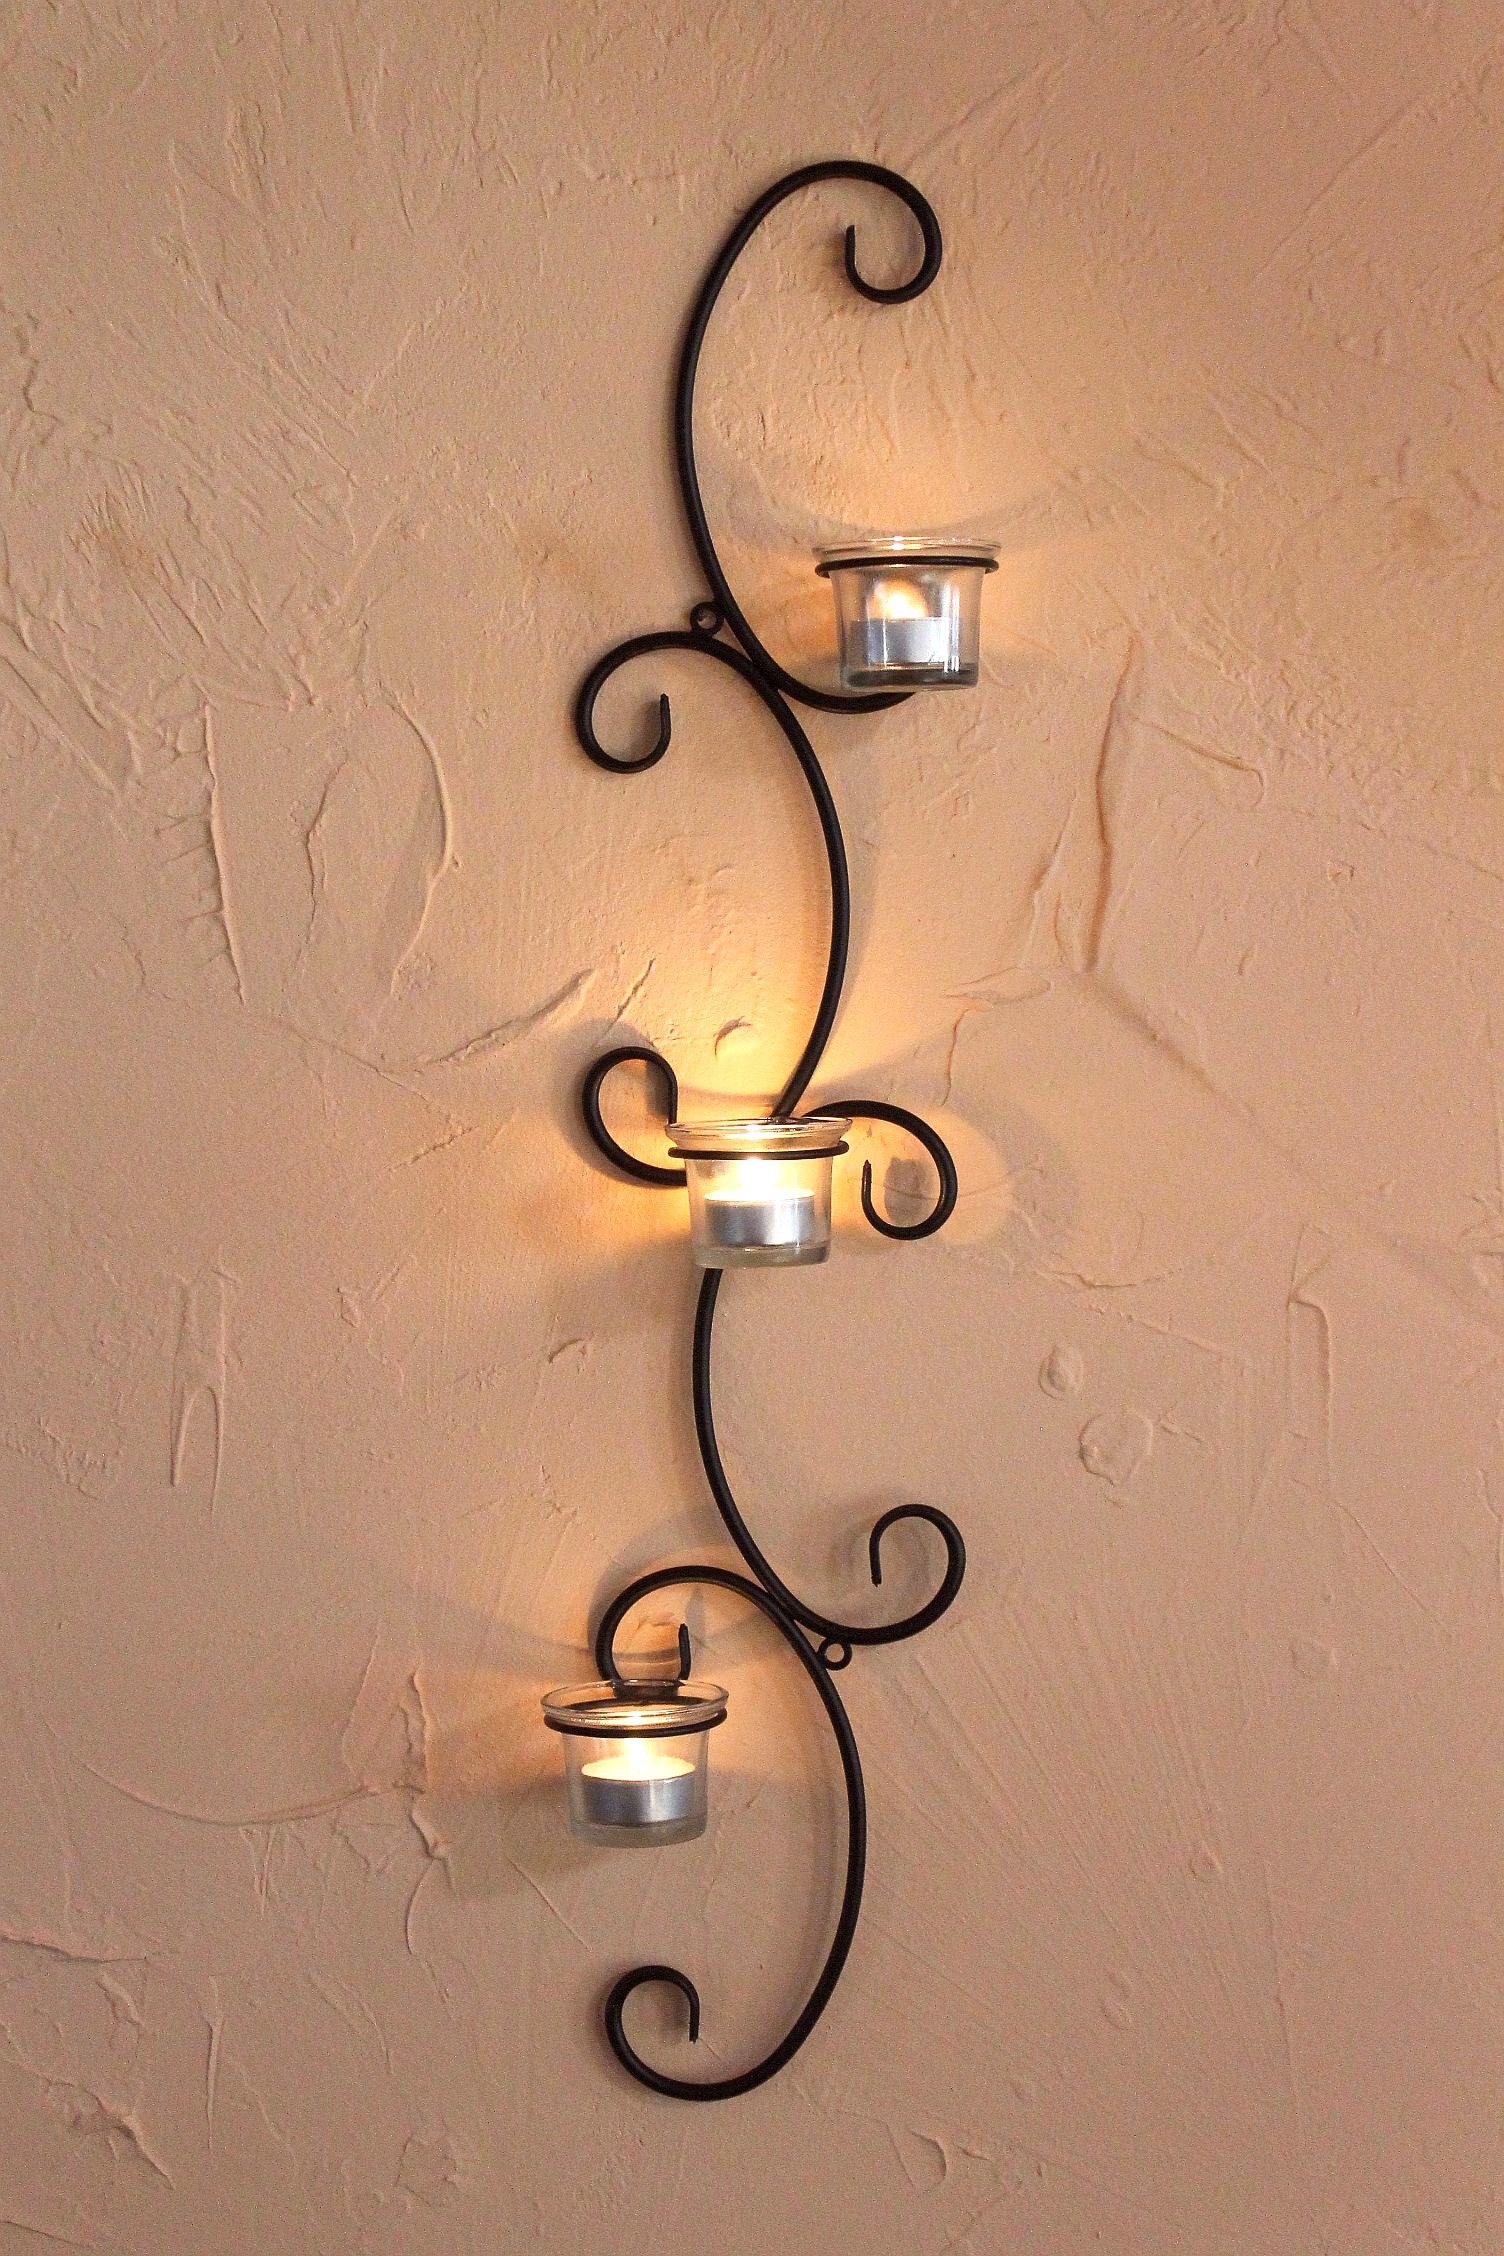 DanDiBo Kerzenleuchter Wandteelichthalter Metall Wand Schwarz Emma 68 cm Teelichthalter Kerzenhalter Wandkerzenhalter Wandleuchter Kerzenleuchter